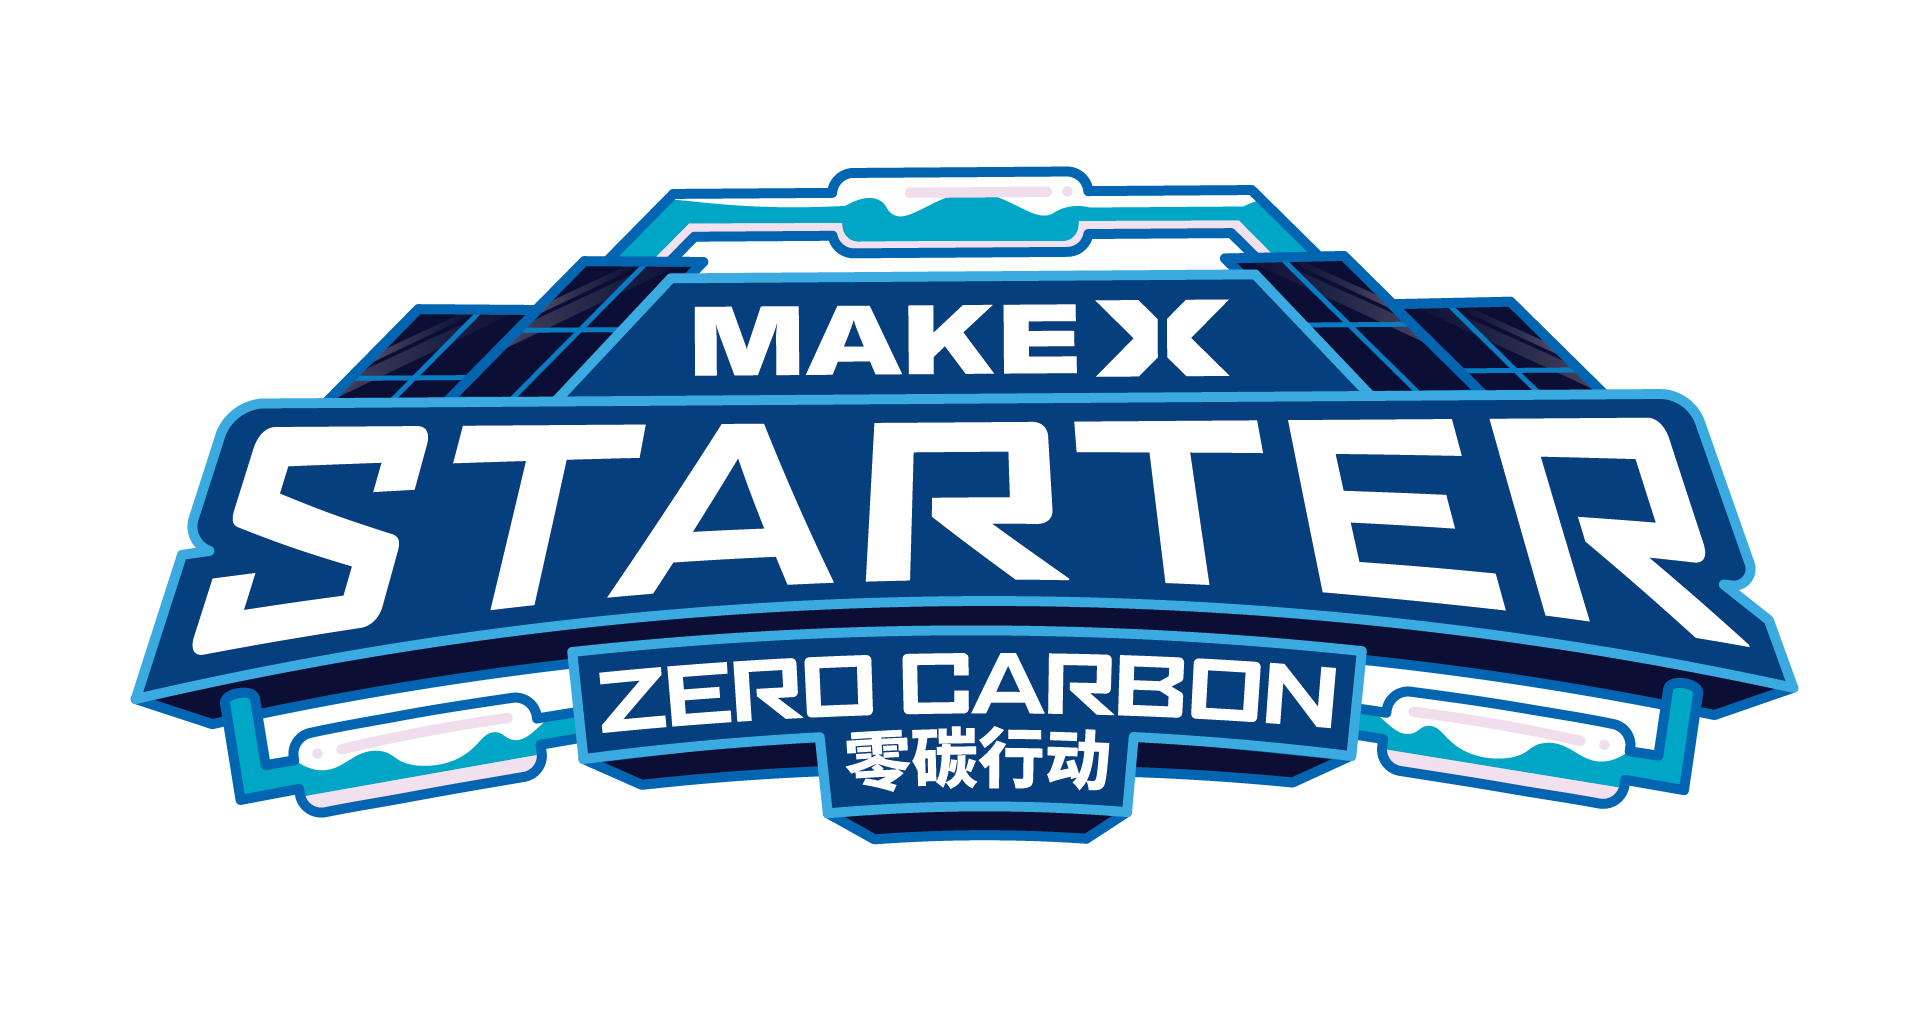 MakeX Starter - Zero Carbon